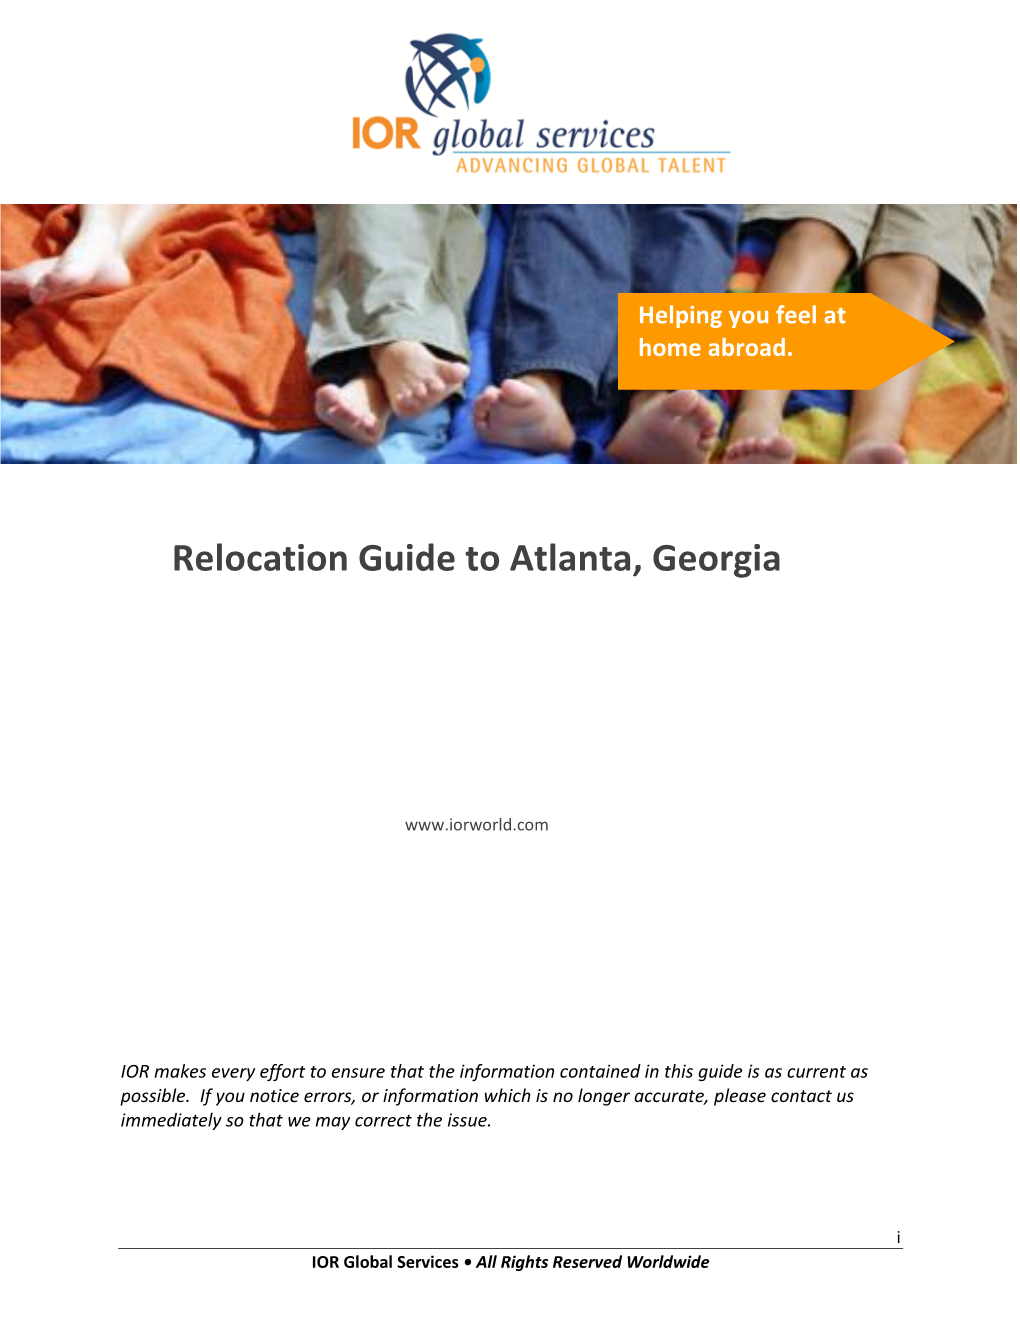 Relocation Guide to Atlanta, Georgia Home Abroad